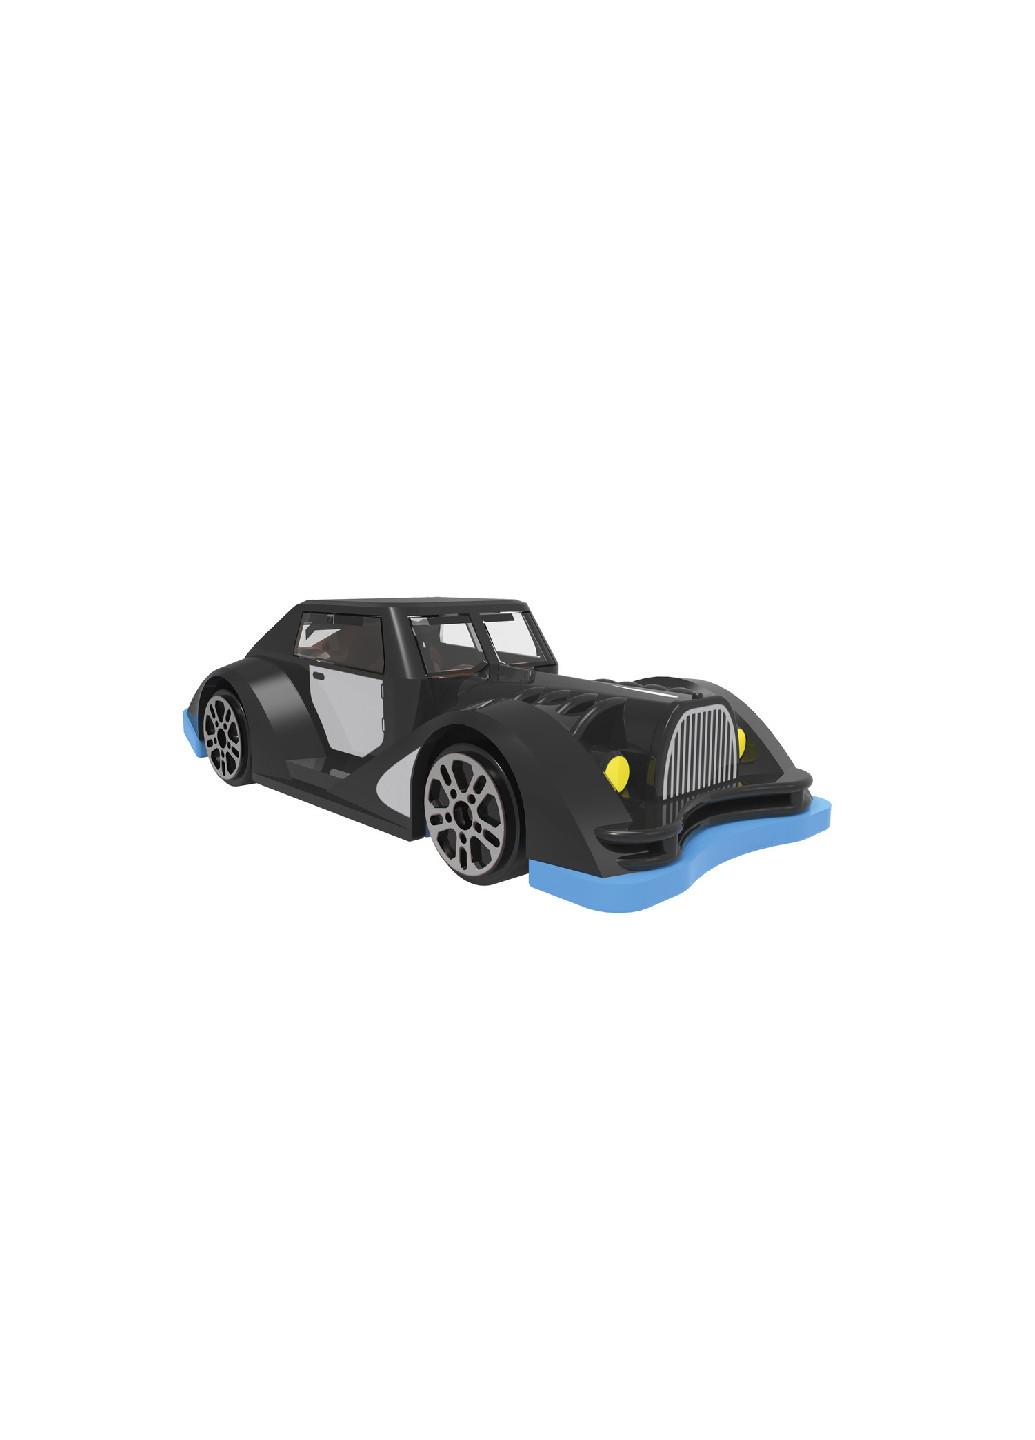 Іграшкова металева машинка швидкісна ретро Crazy Cars чорна Playtive (259208400)